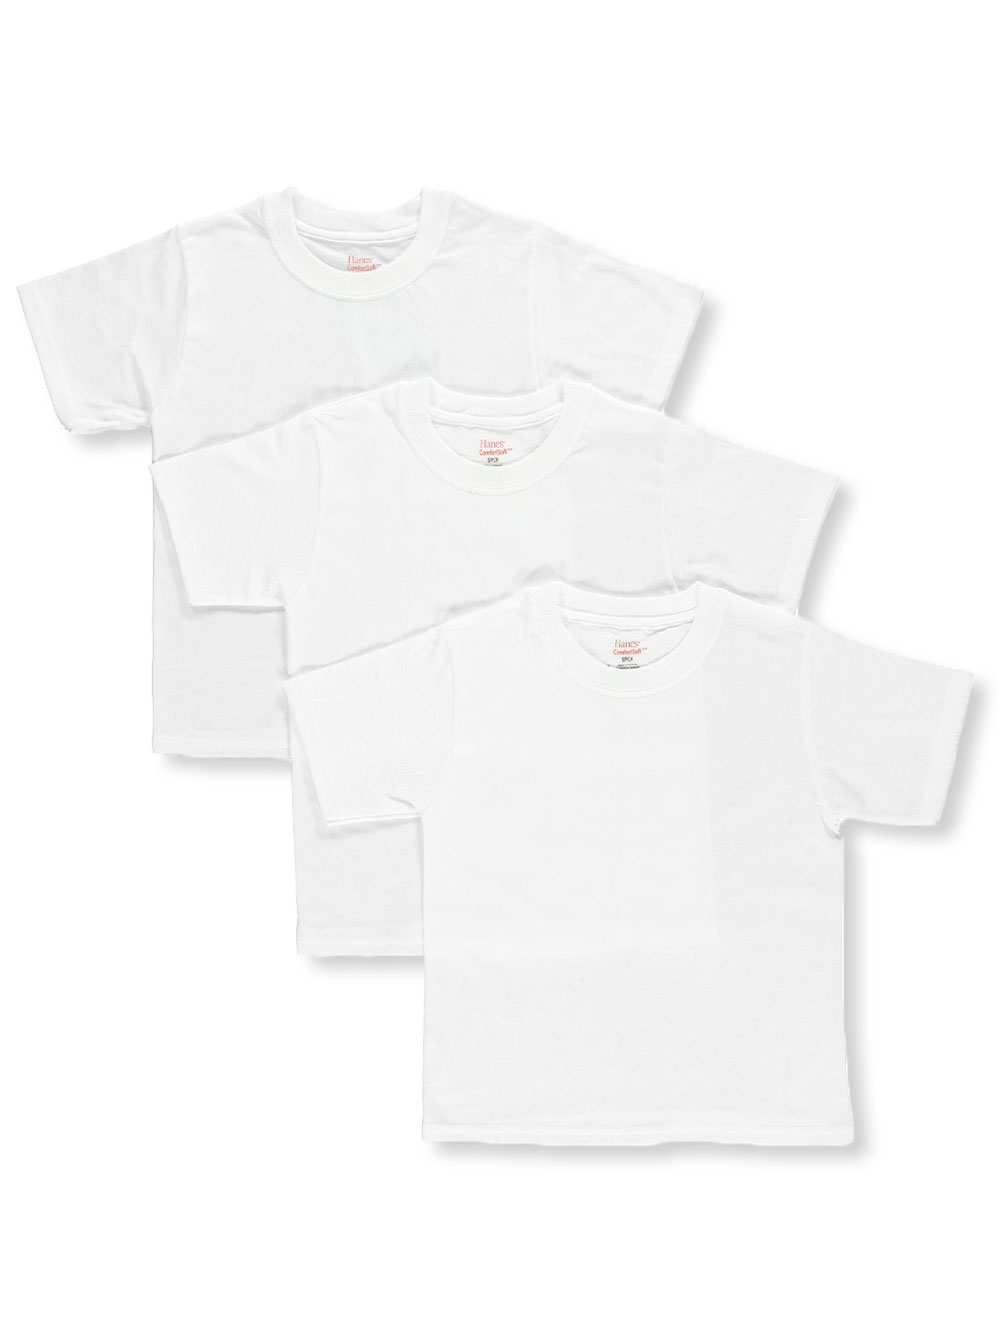 Supreme Hanes T Shirt Quality Supreme - dope t shirts roblox coolmine community school